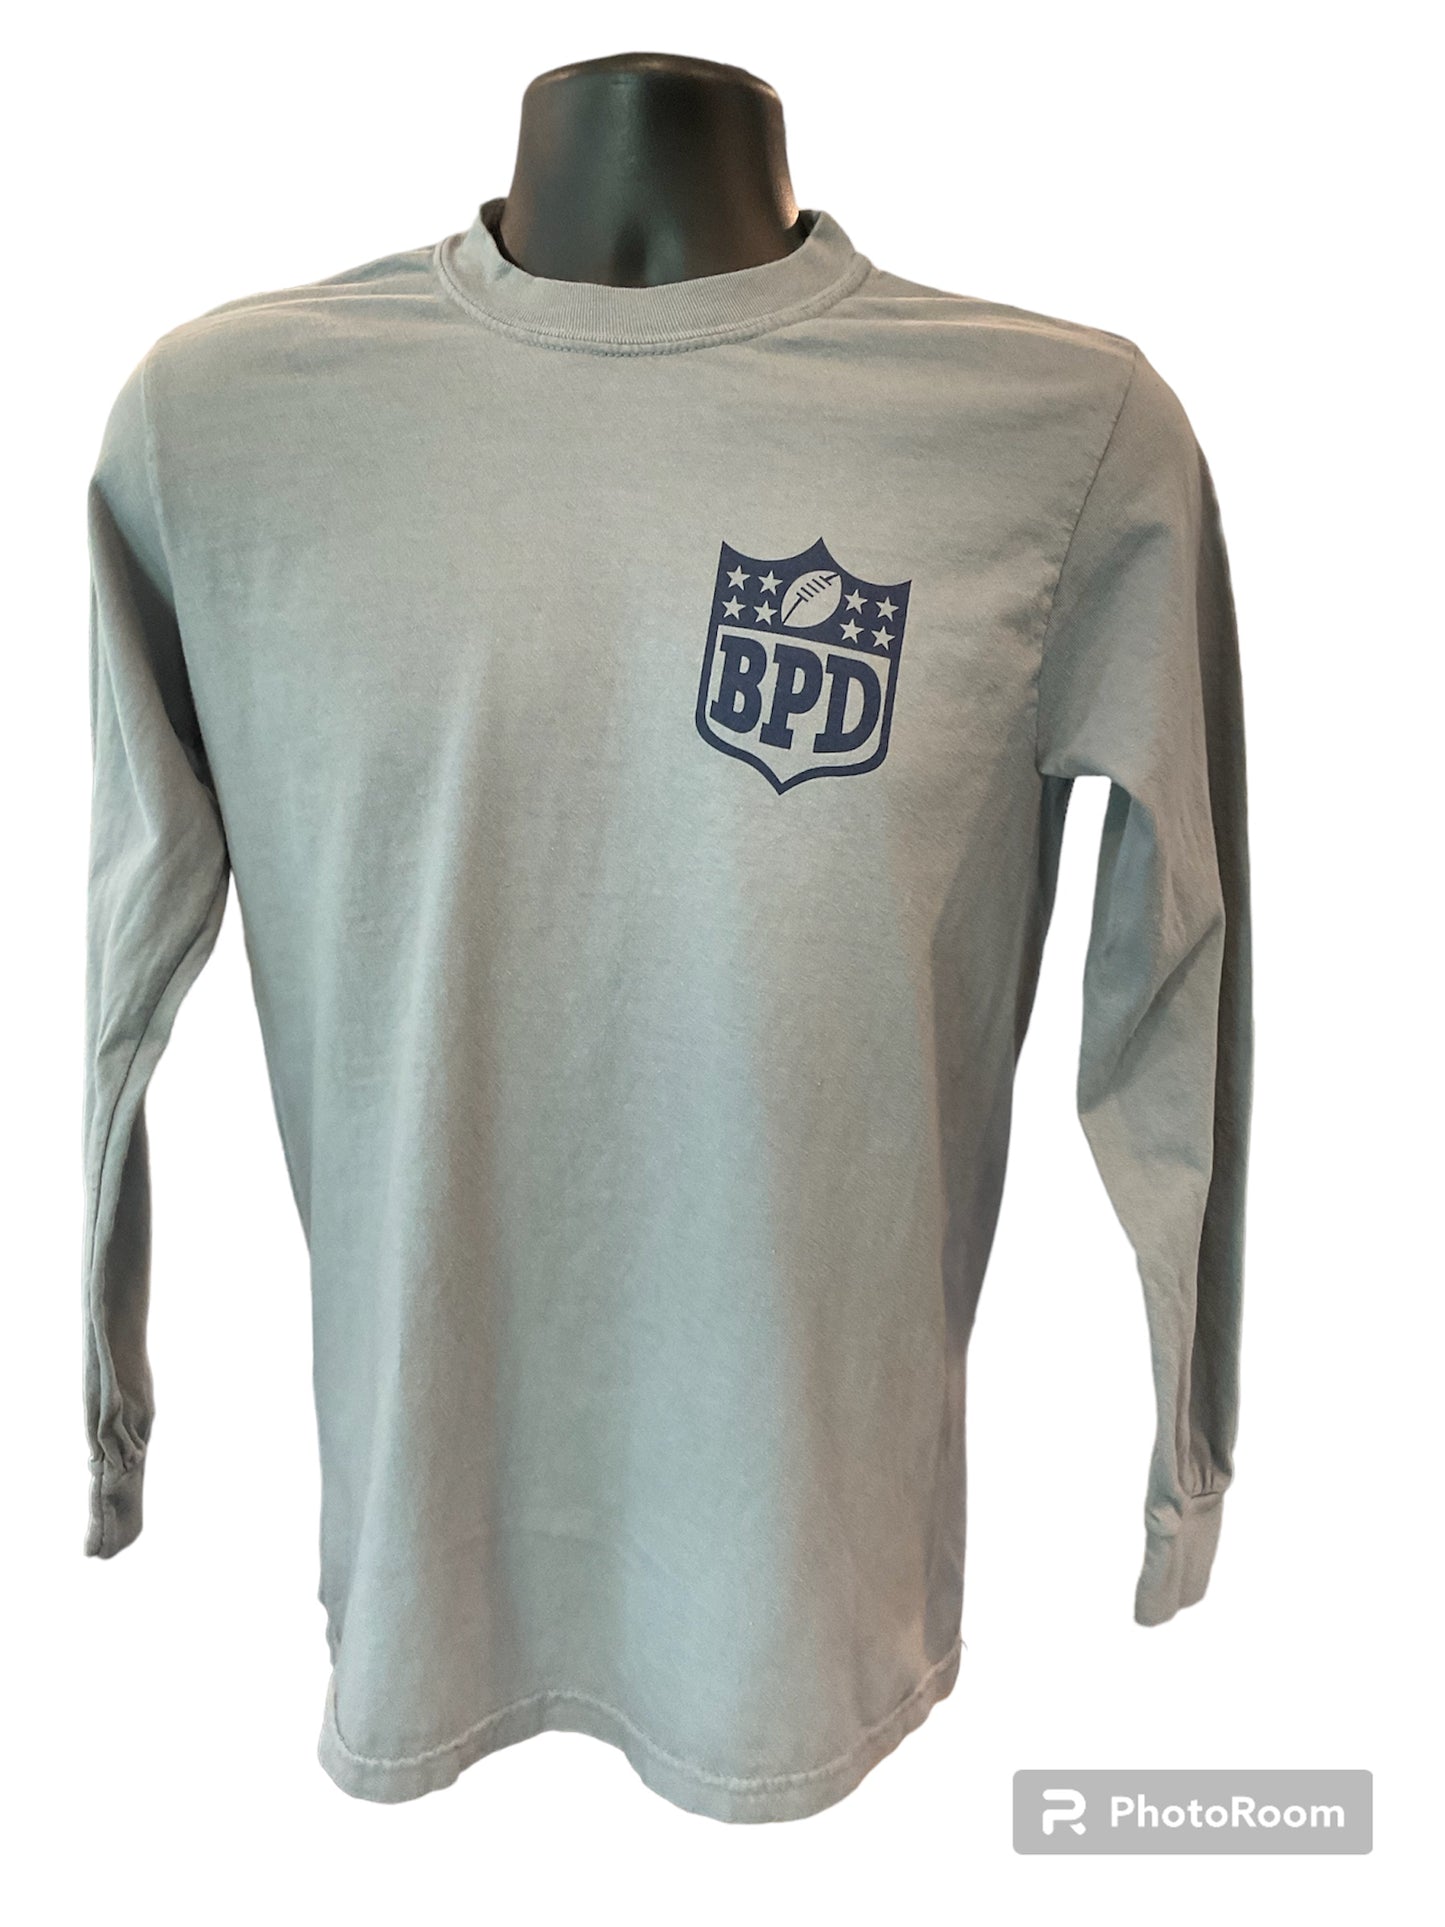 BPD Football "City of Champions" long sleeve shirt